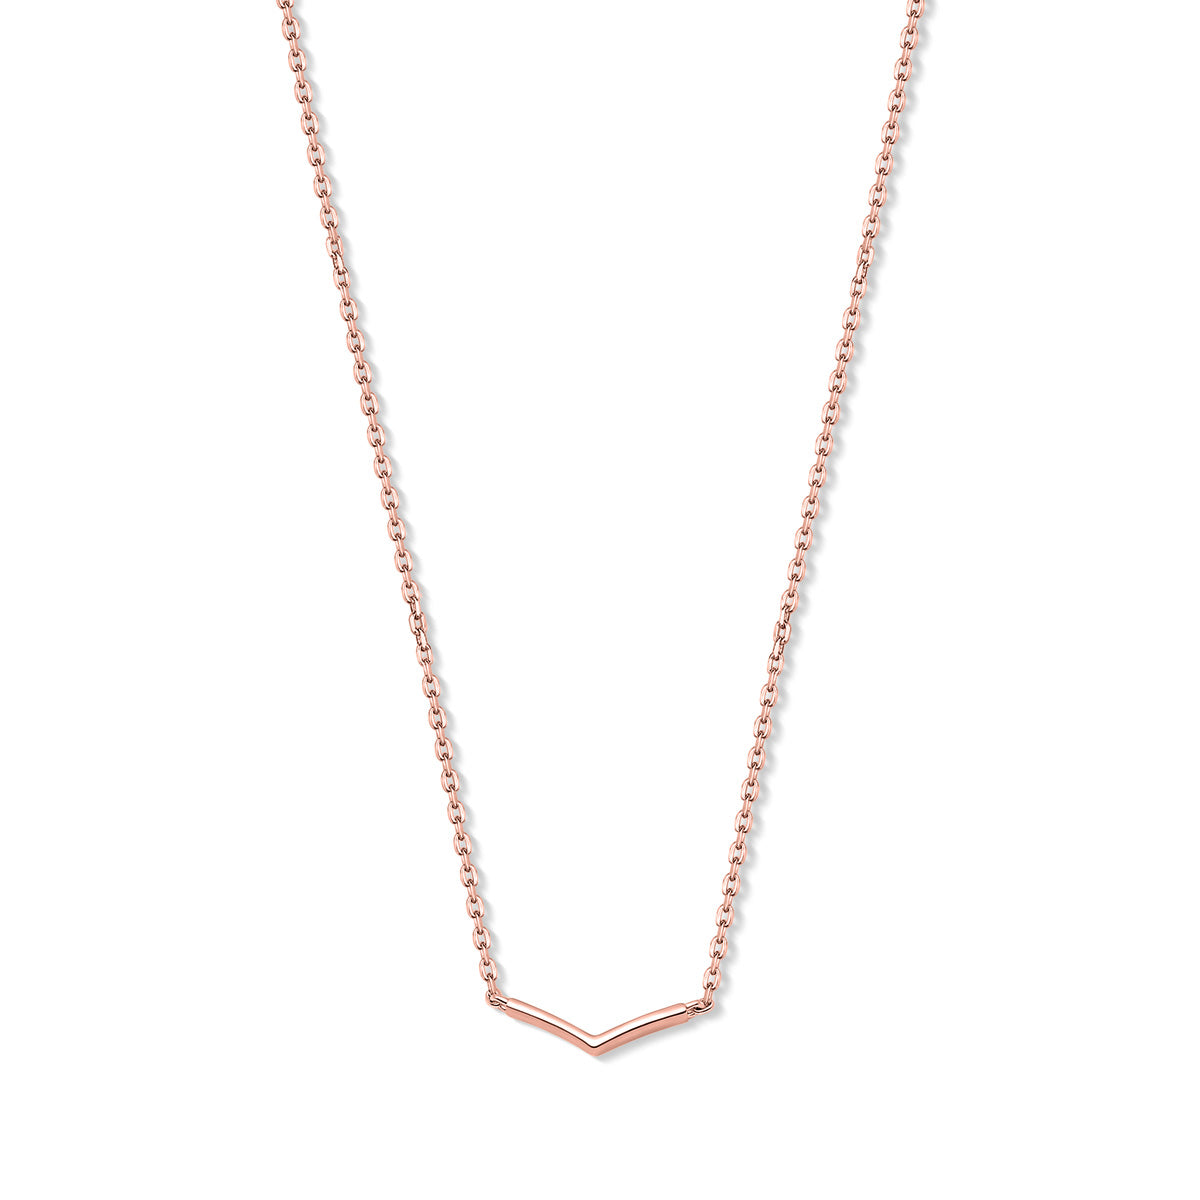 Dainty rose gold v shaped necklace